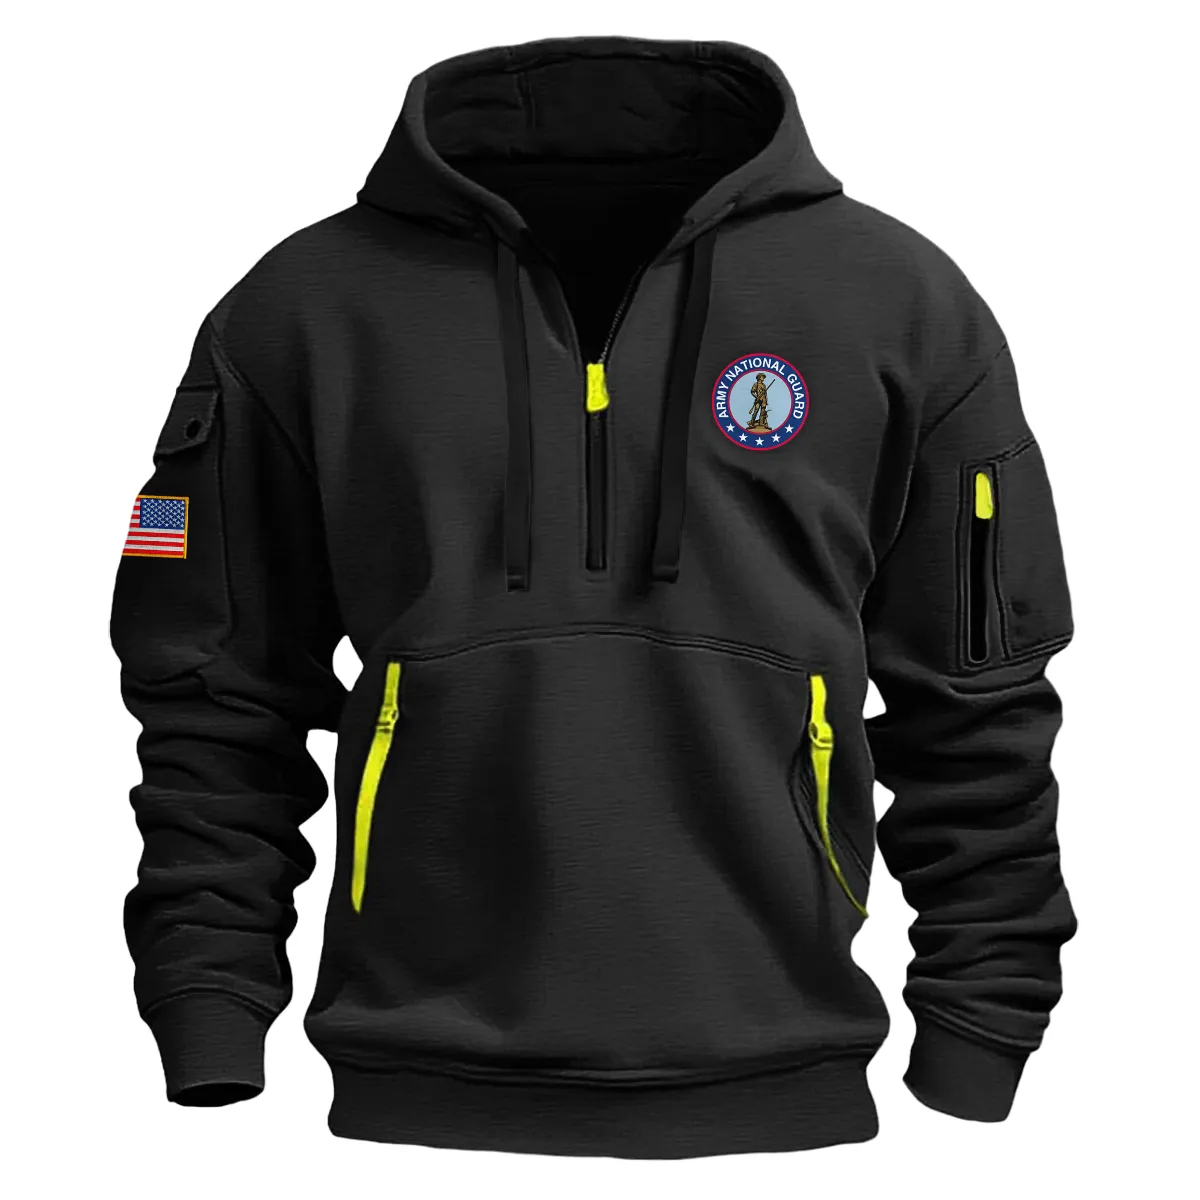 US Military All Branches U.S. Army National Guard Fashion Hoodie Half Zipper